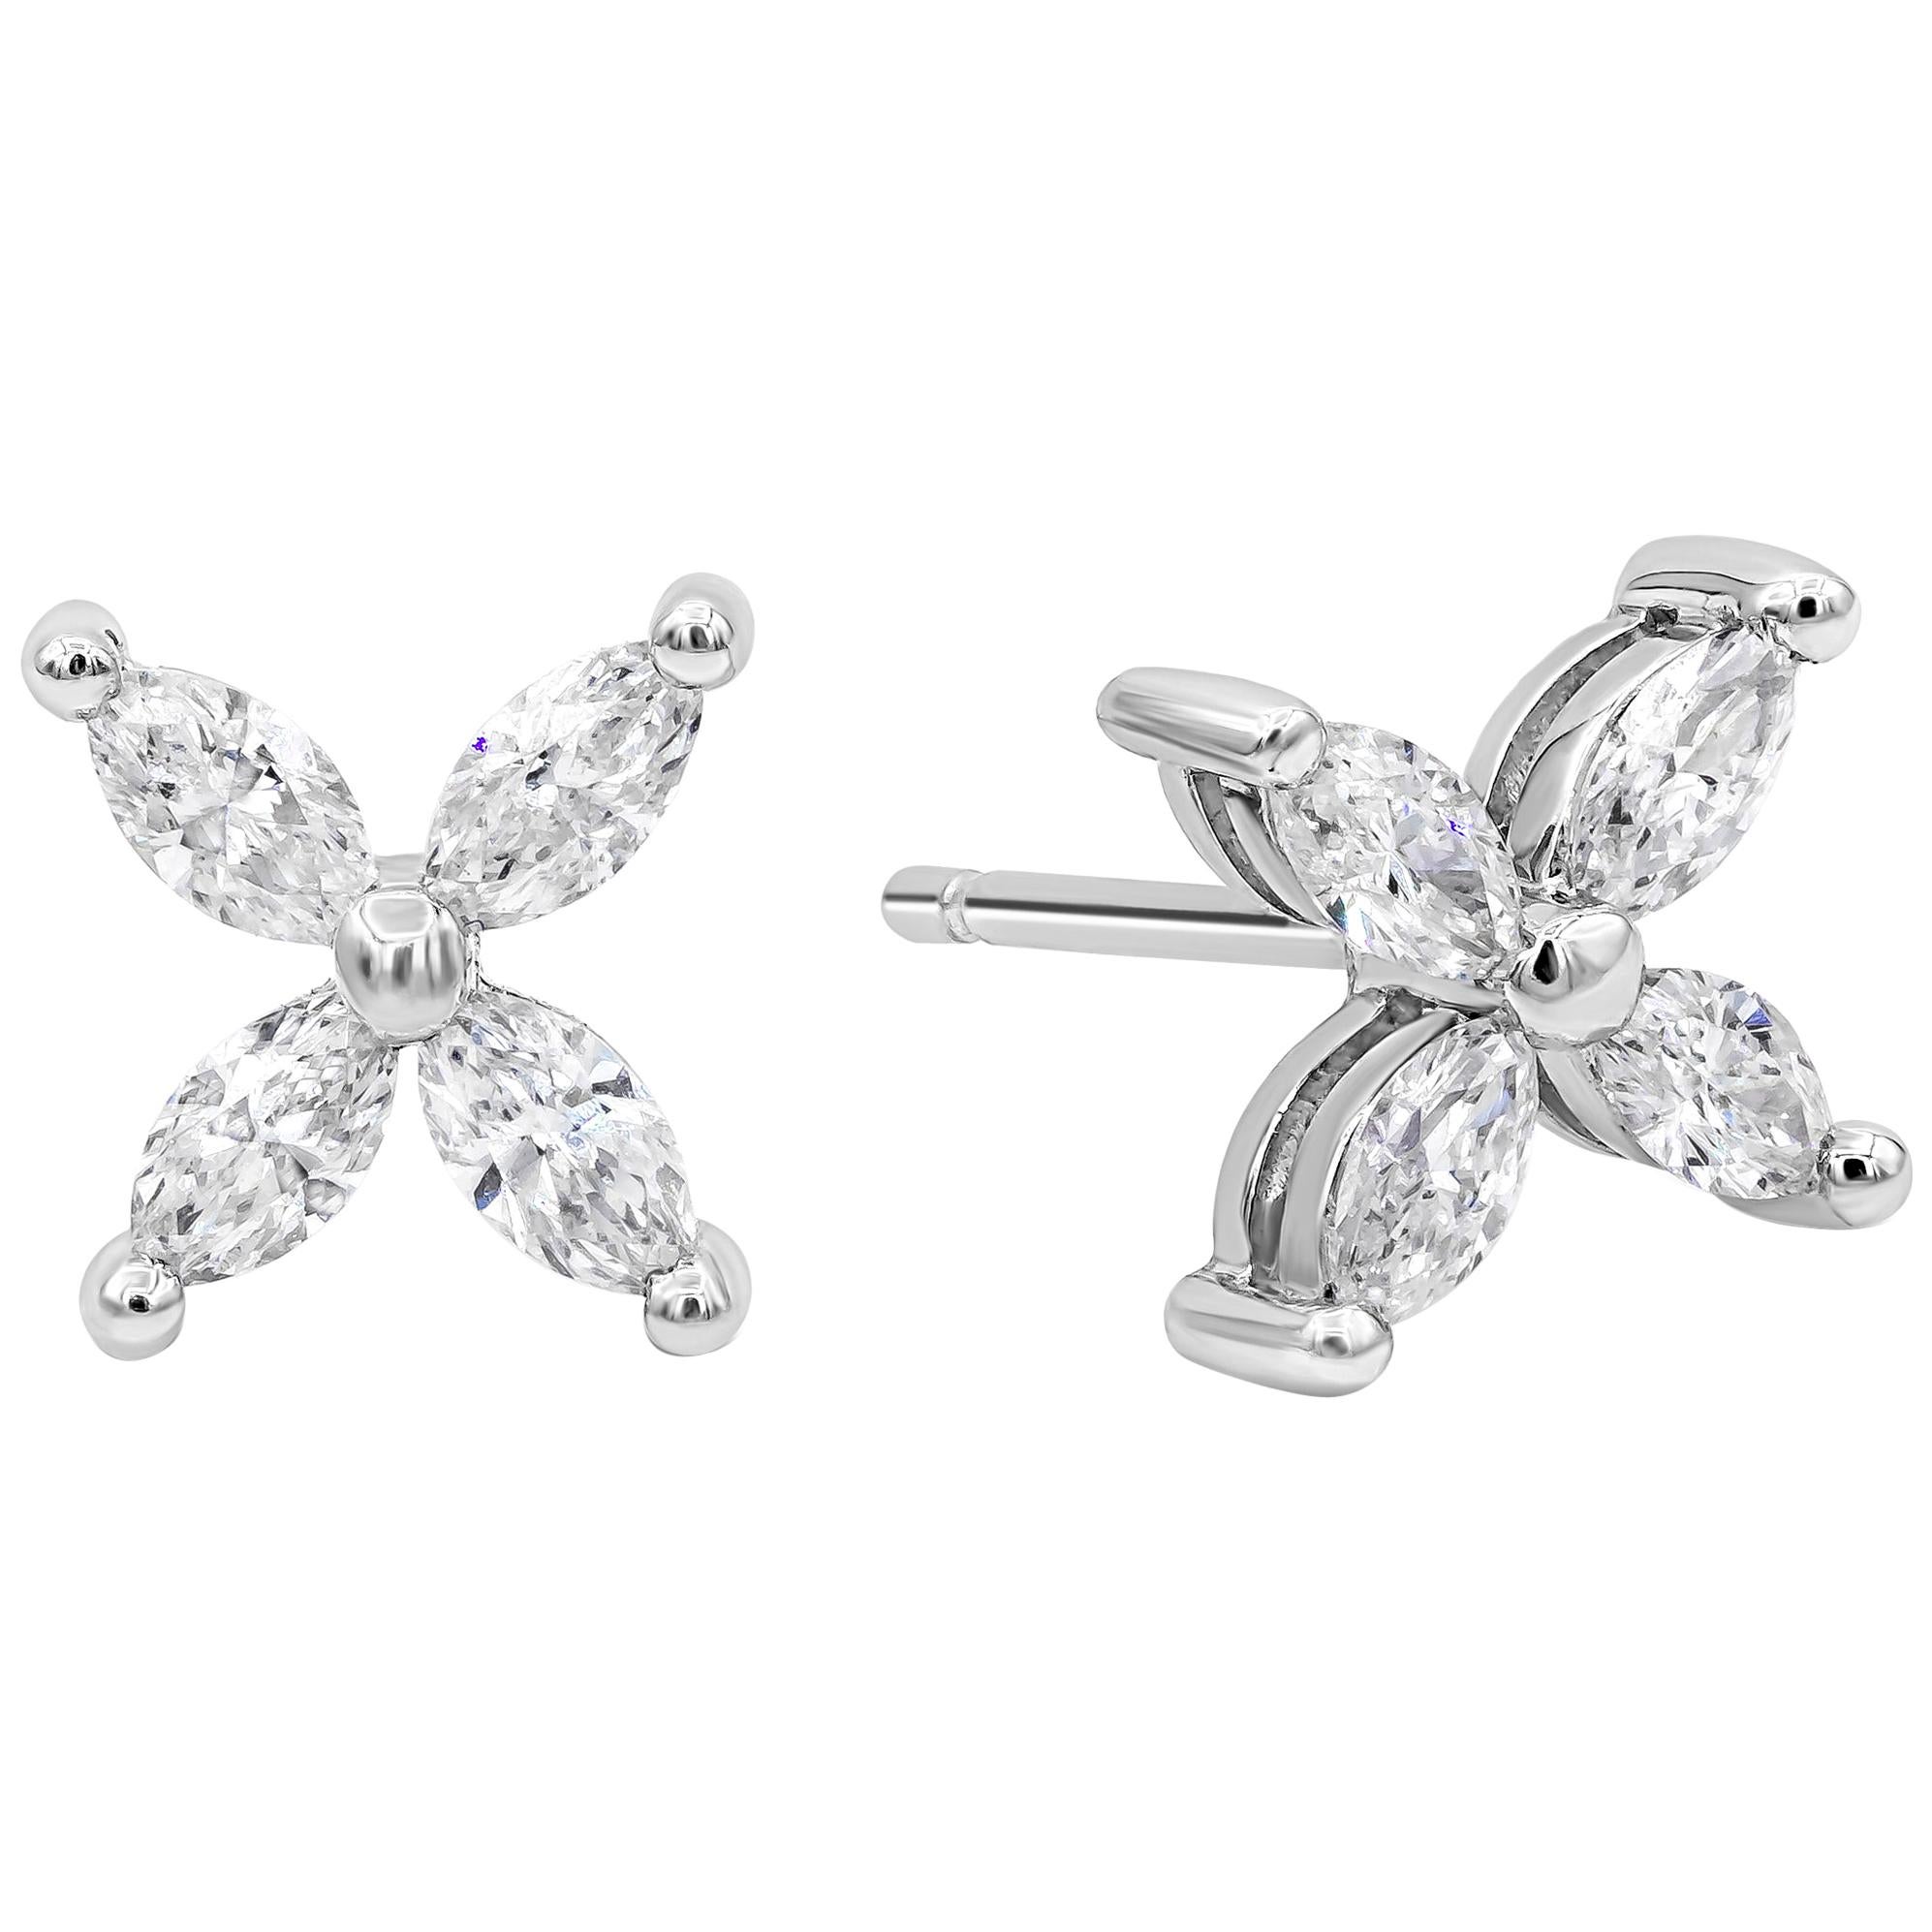 Roman Malakov 0.55 Carats Total Marquise Cut Diamond Cluster Stud Earrings For Sale